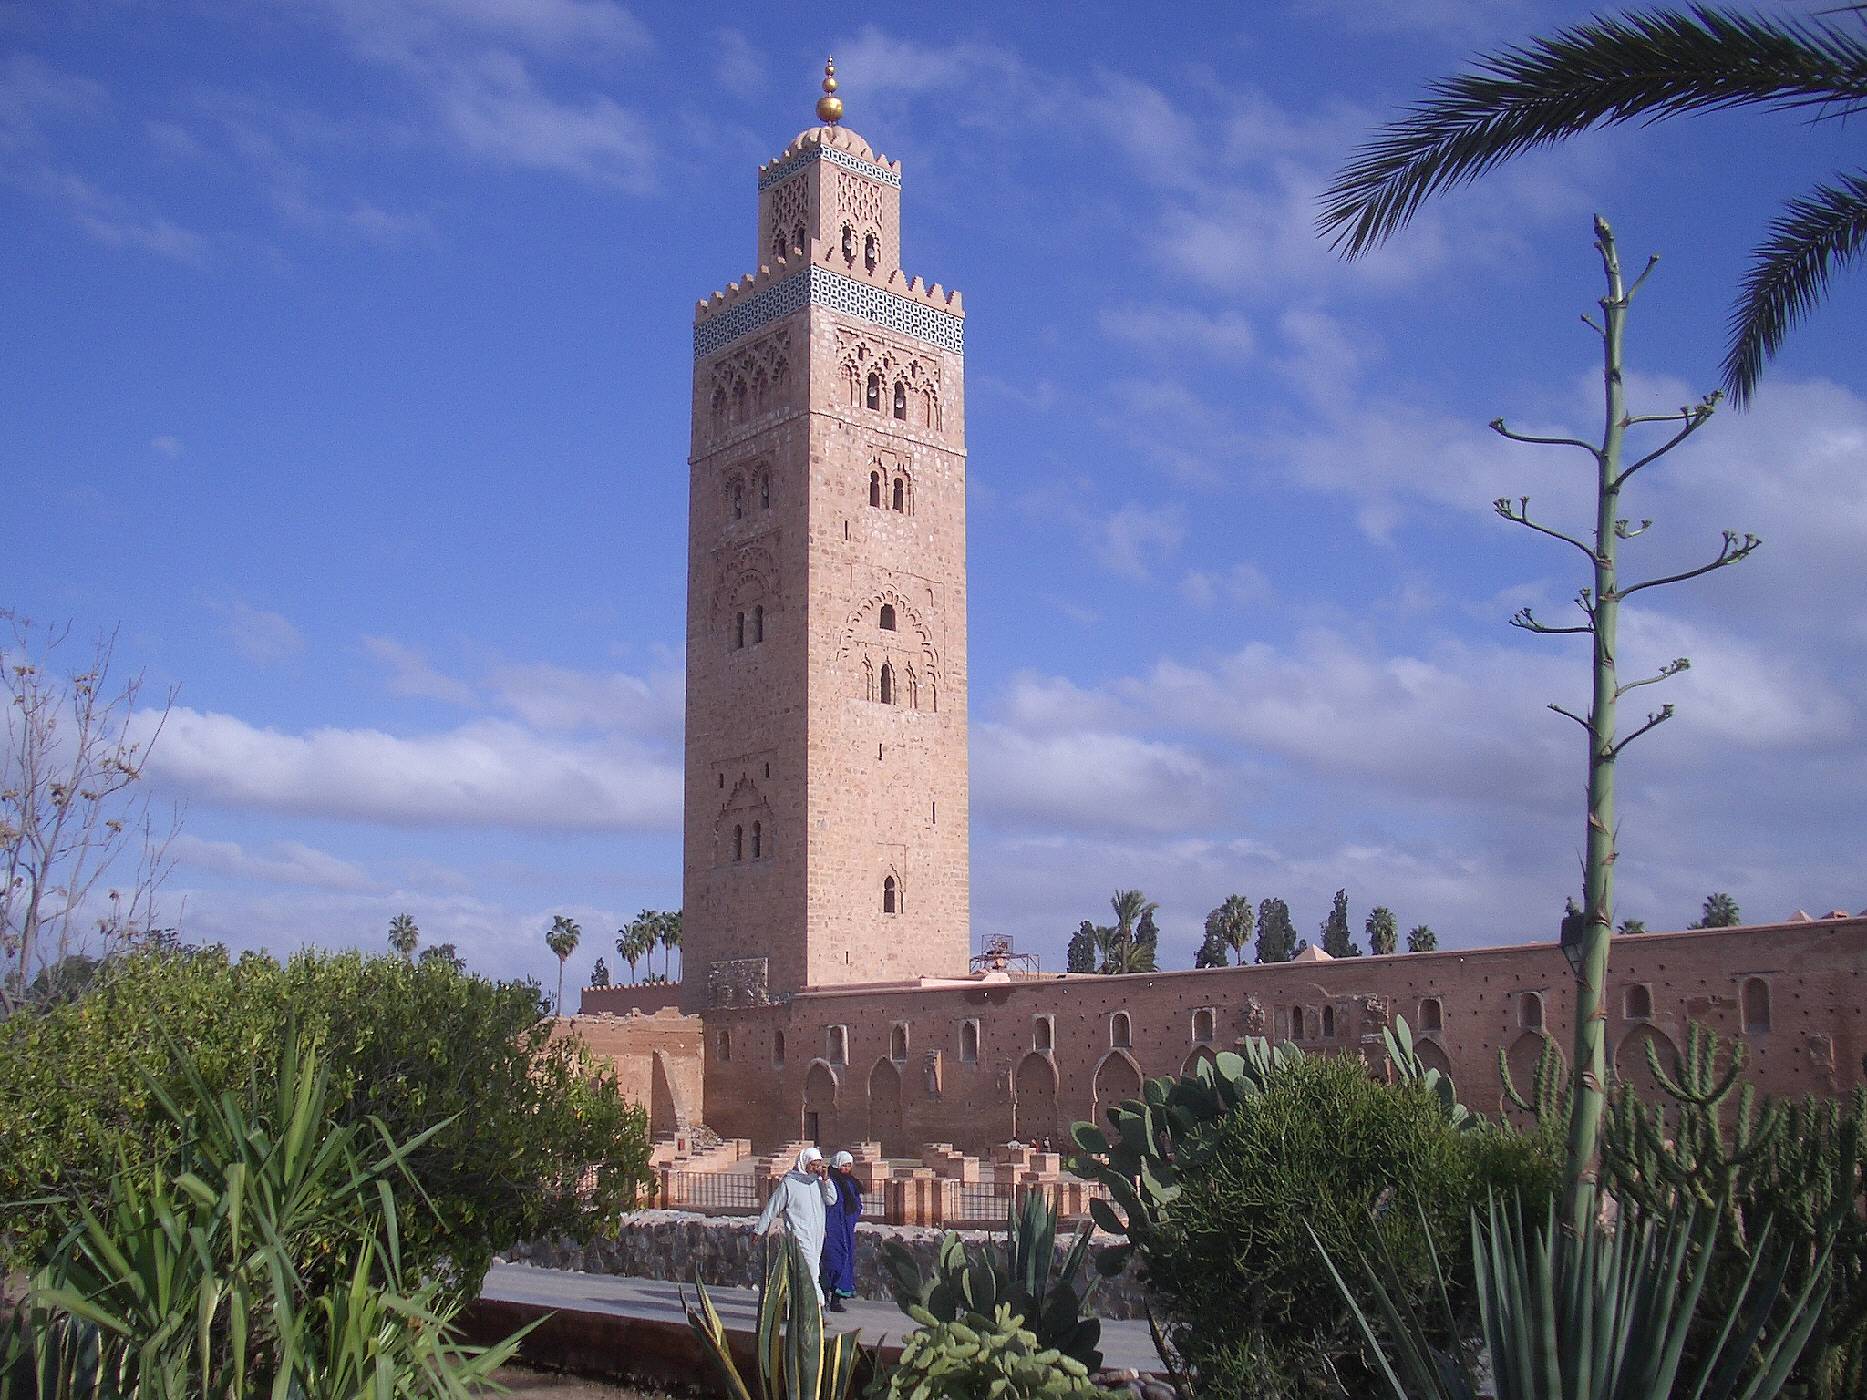 Ankunft in Marrakesch